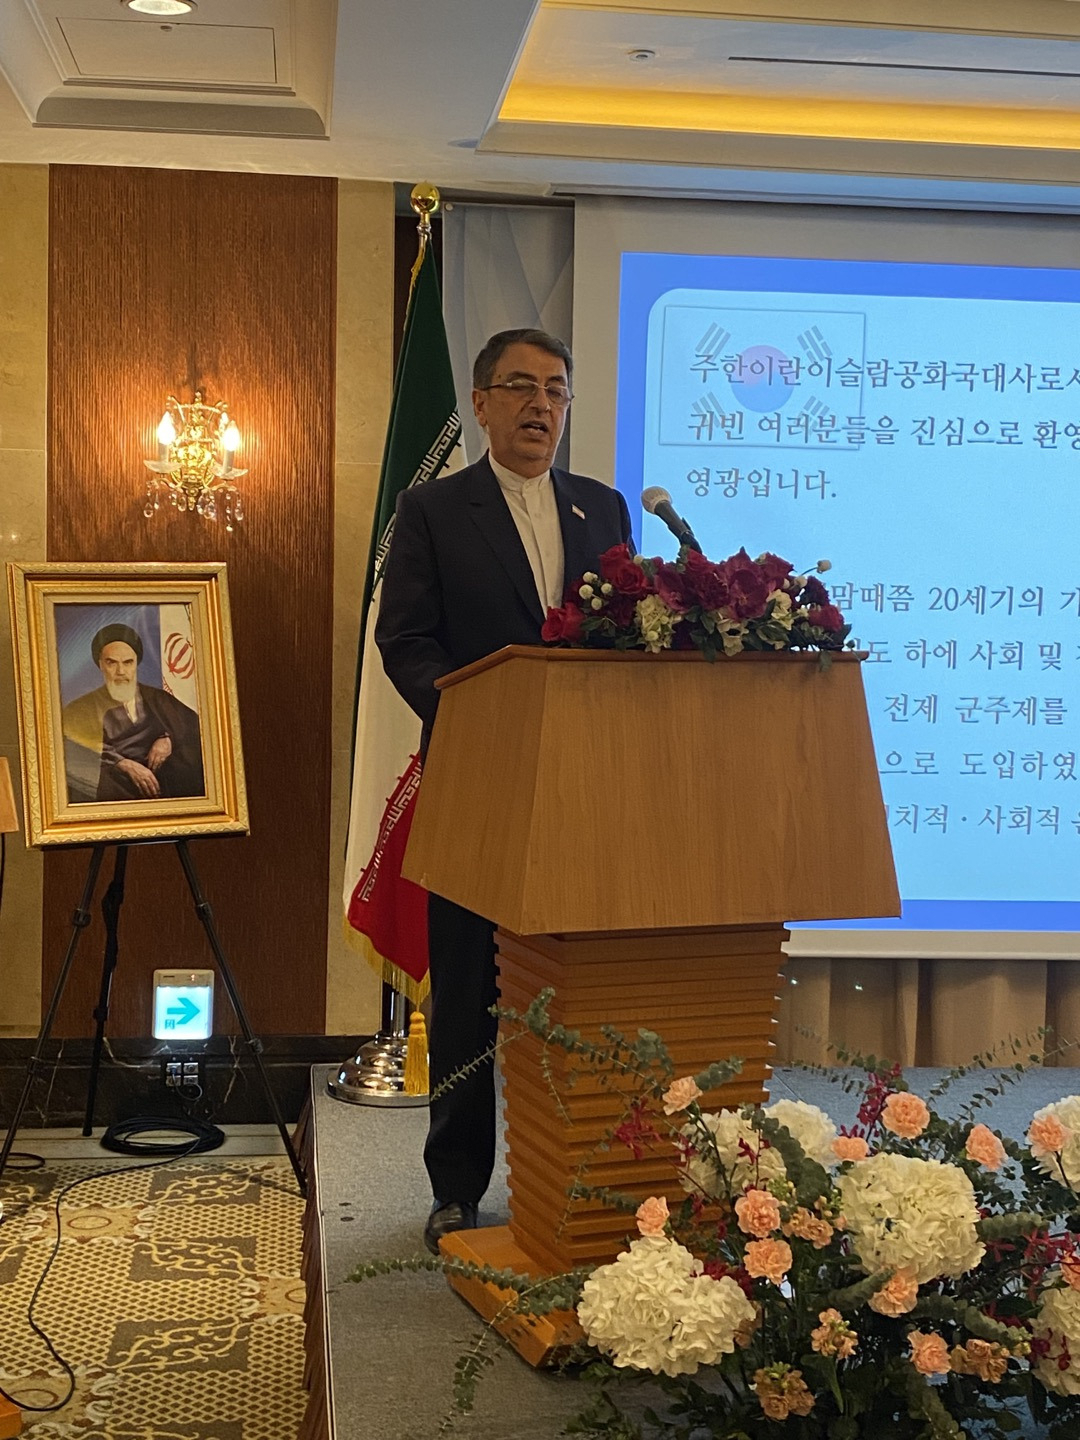 Iranian Ambassador to Korea Saeed Badamchi Shabestari delivers remarks during the celebrations of the 44th Islamic Revolution at Lotte Hotel in Jung-gu, Seoul, on Thursday. (Sanjay Kumar, The Korea Herald)